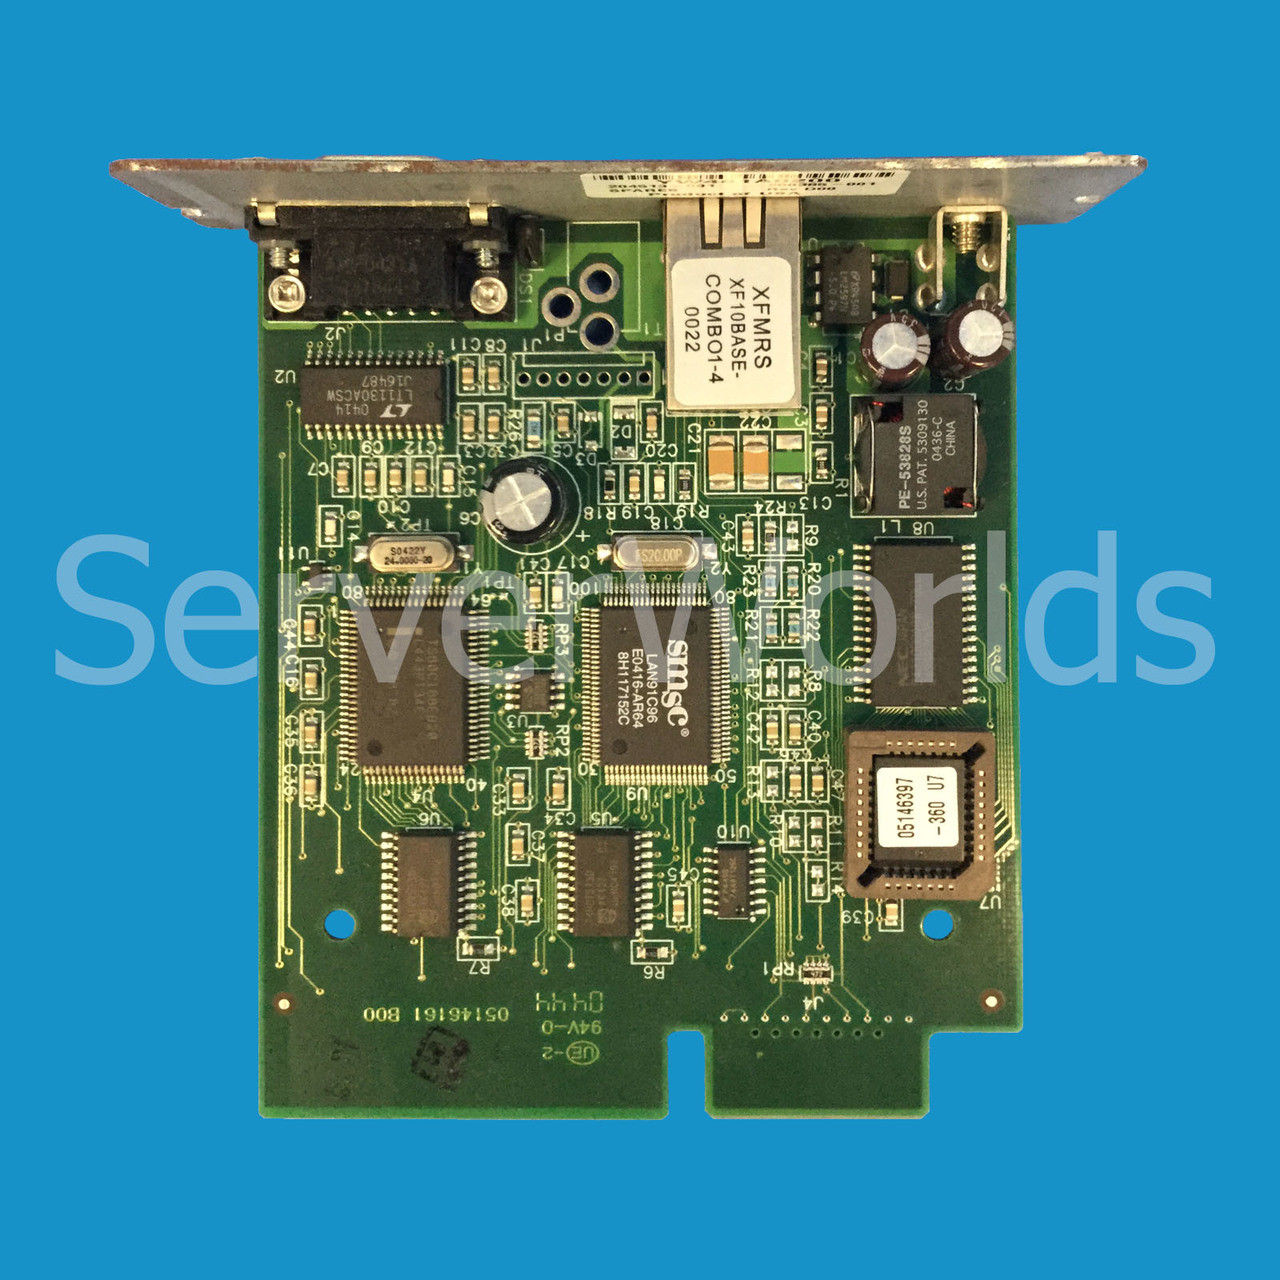 HP 204513-001 SNMP / Serial Port Card UPS 200385-001